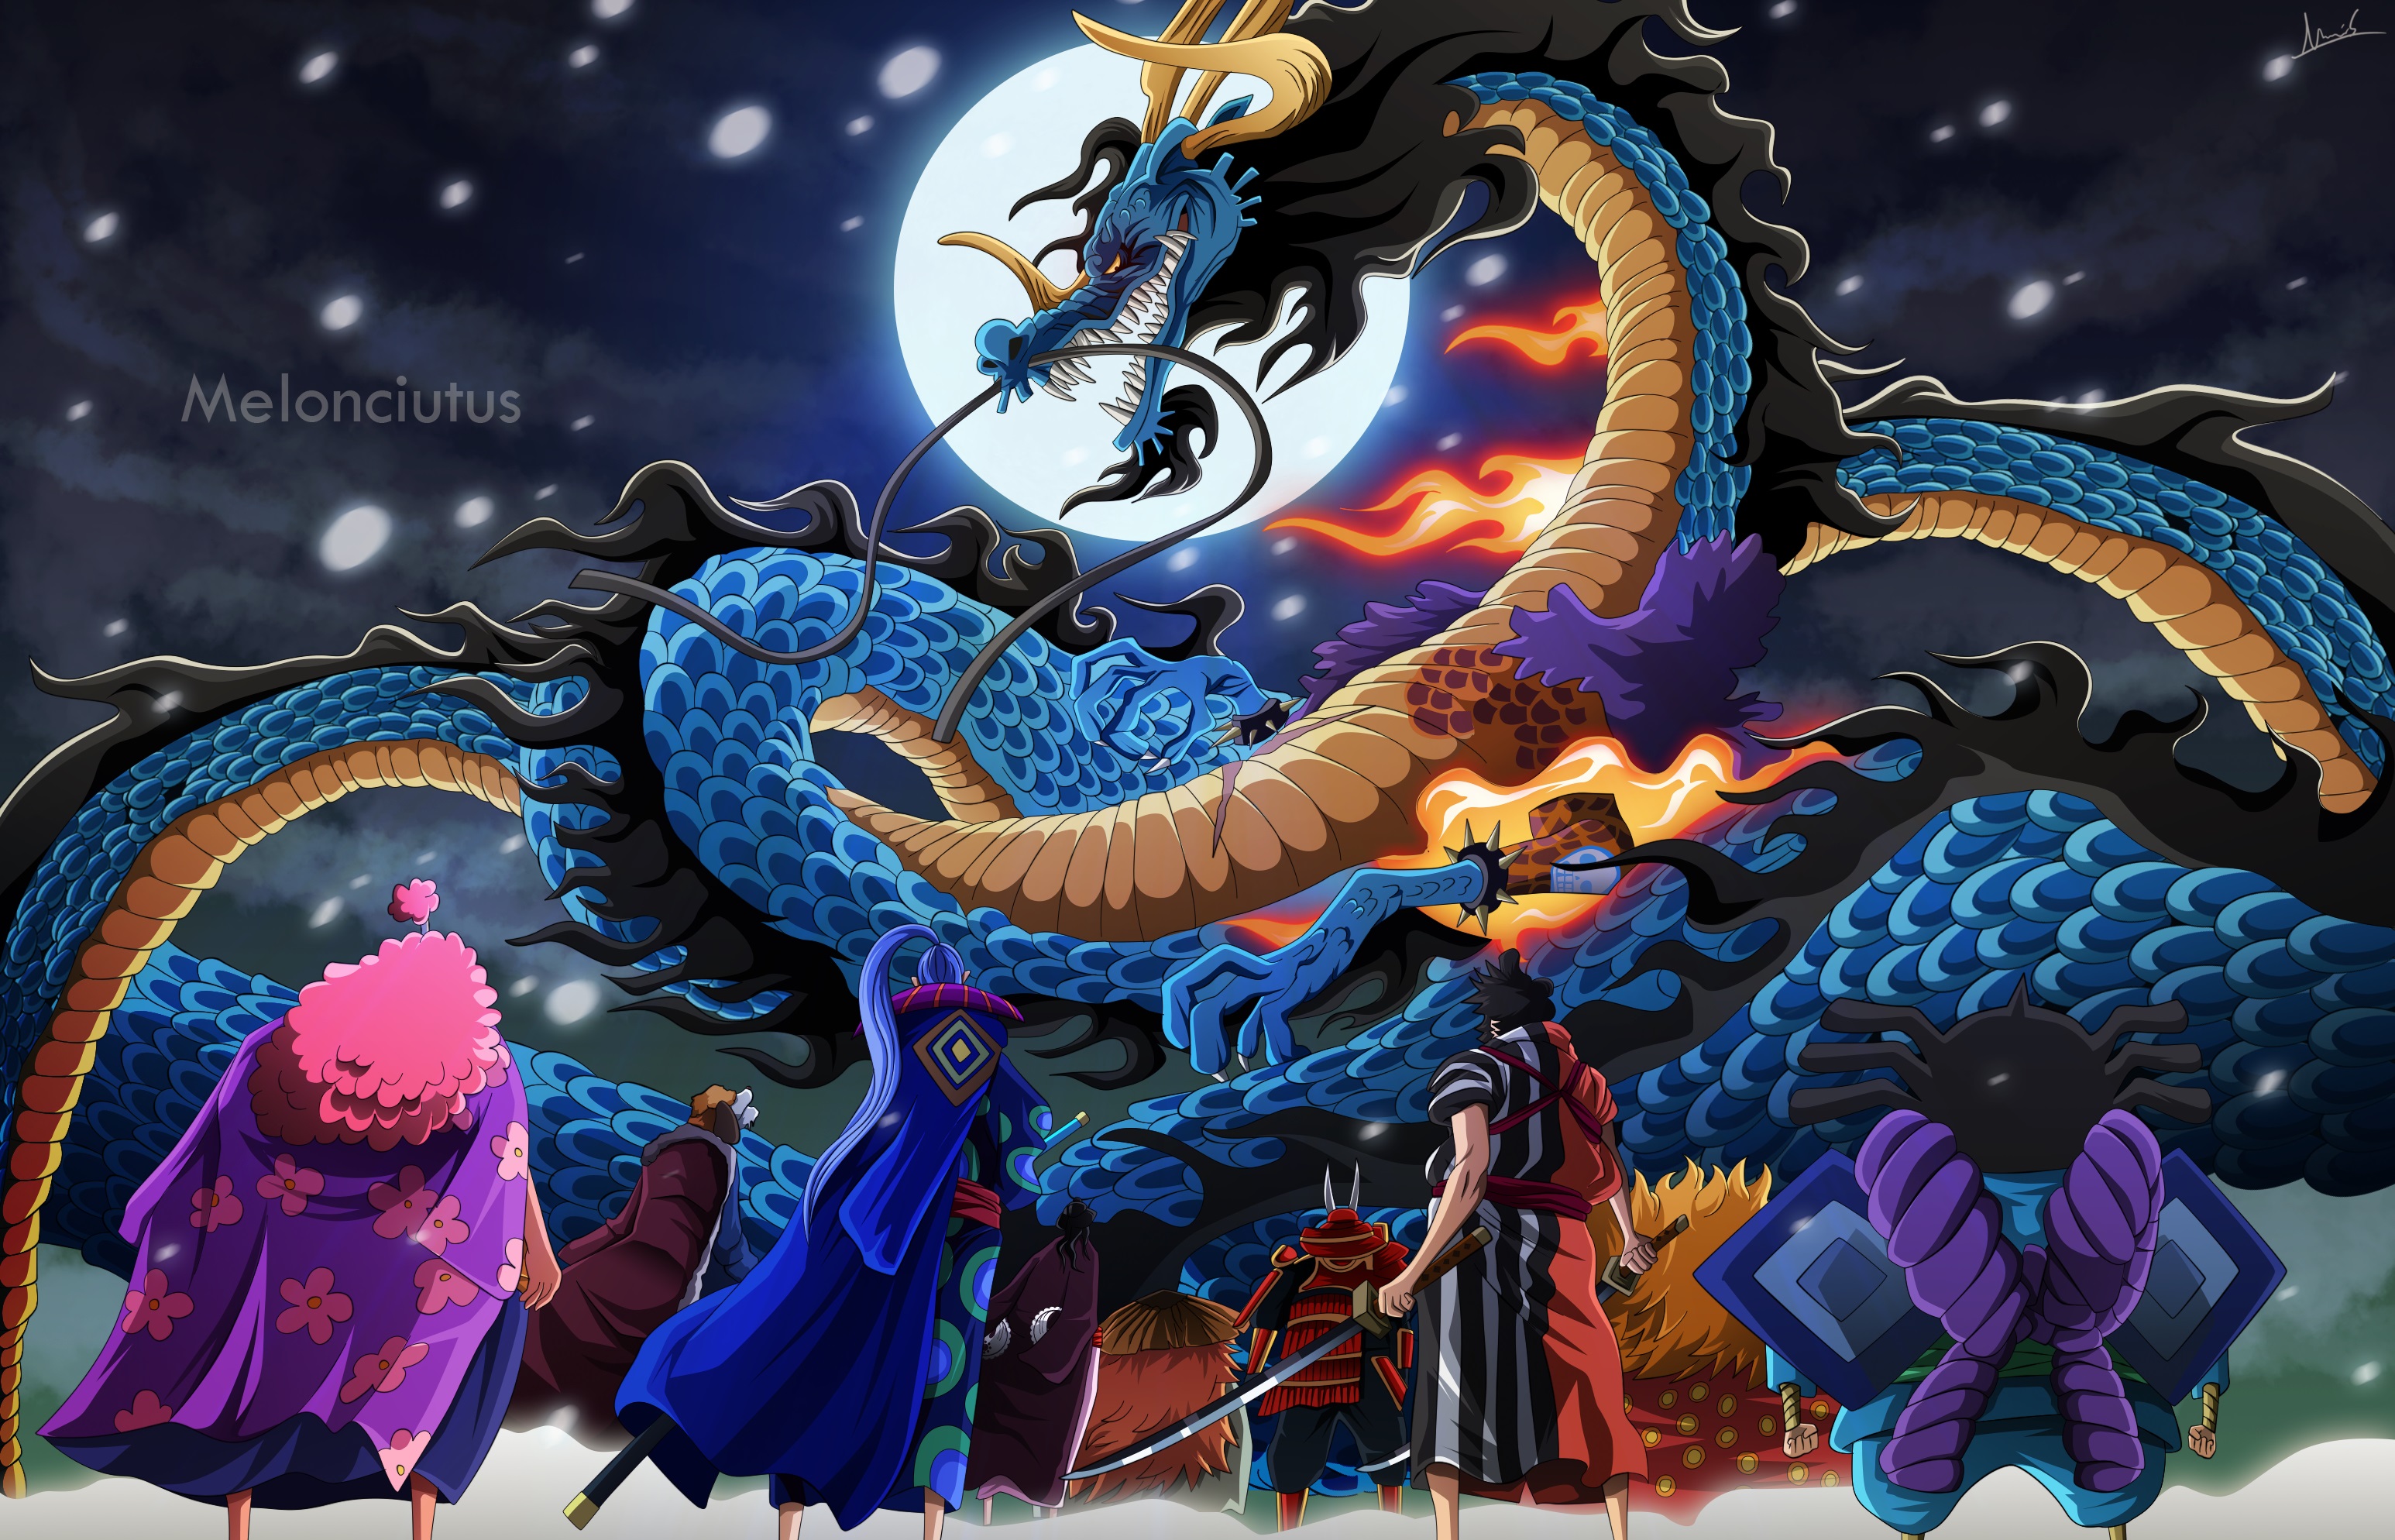 Anime 3092x1988 One Piece Kaido low-angle anime Chinese dragon men rear view moonlight sword artwork fantasy art creature colorful Asia manga Moon